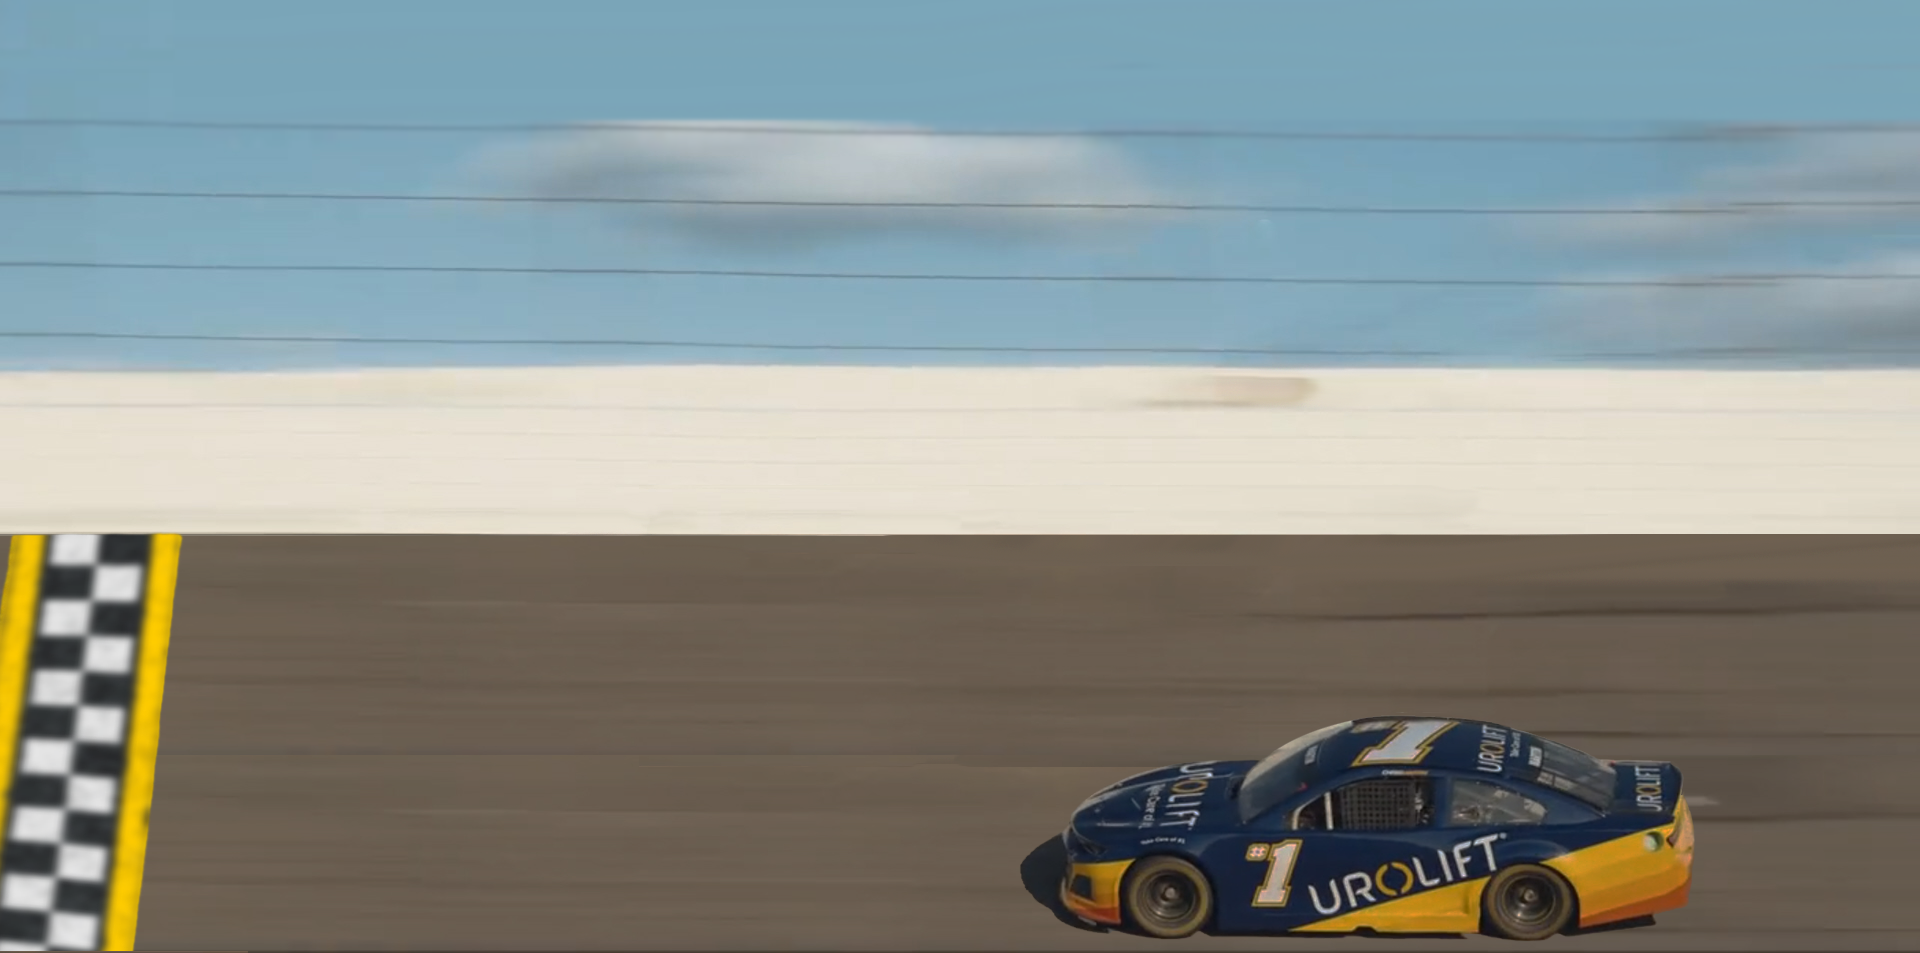 UroLift race car heading toward finish line